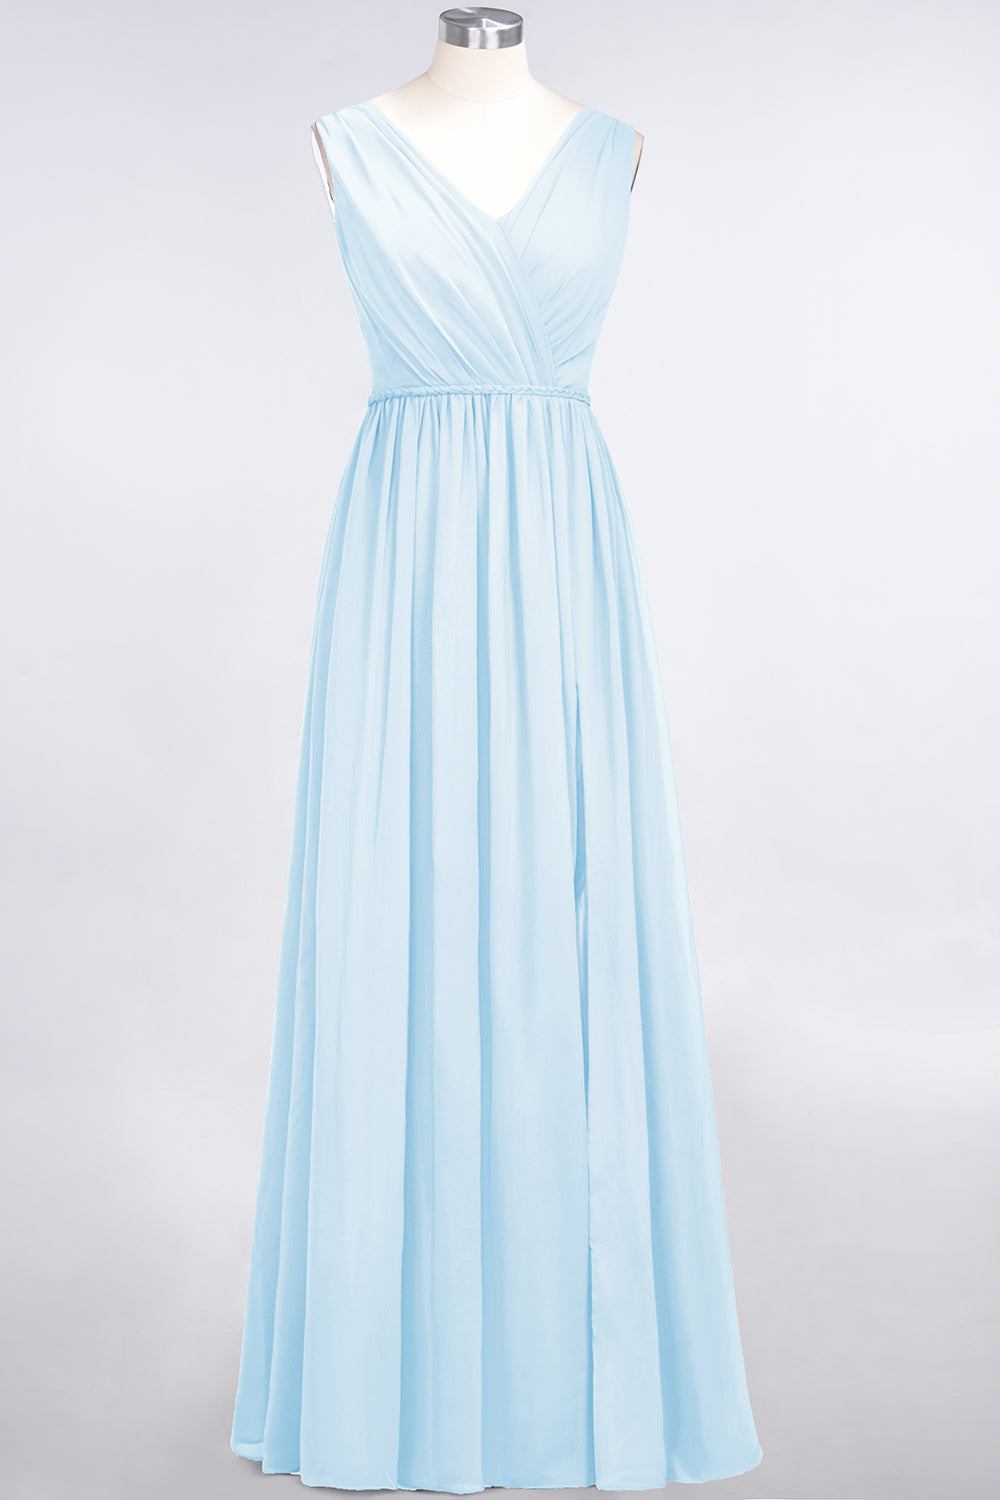 Glamorous TulleV-Neck Ruffle Burgundy Bridesmaid Dress Online